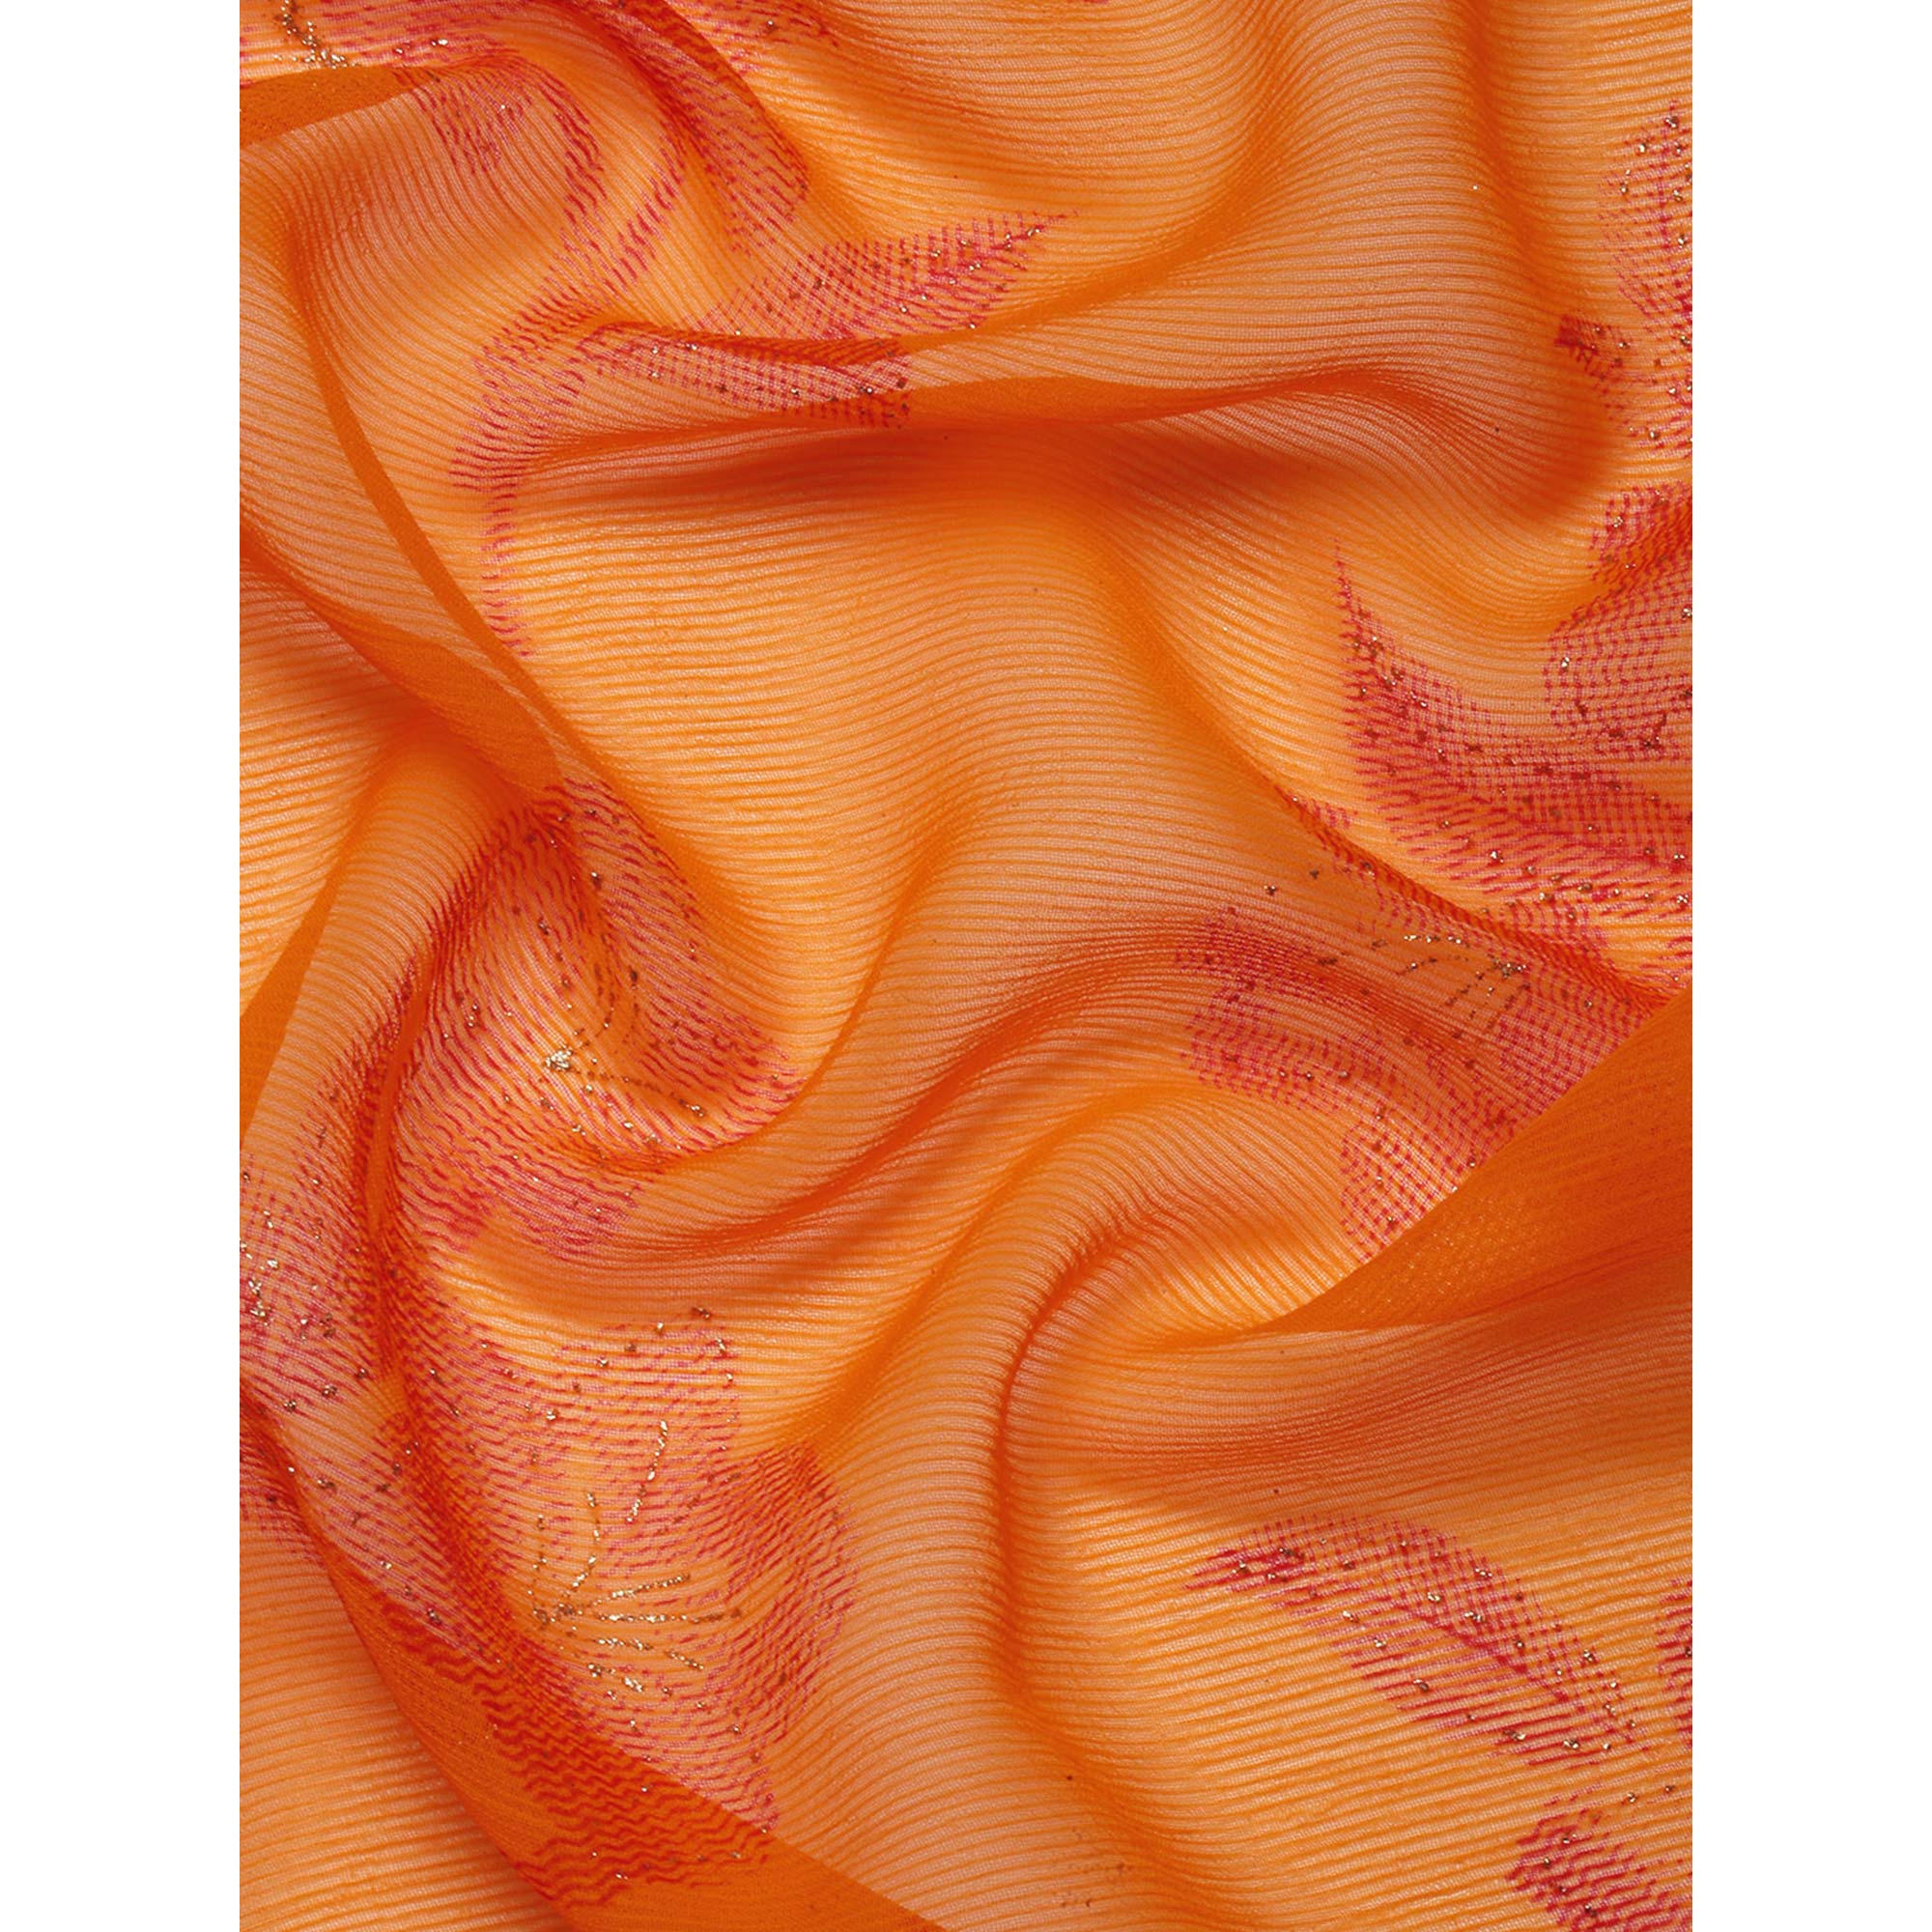 Light Orange Floral Foil Printed Zomato Saree